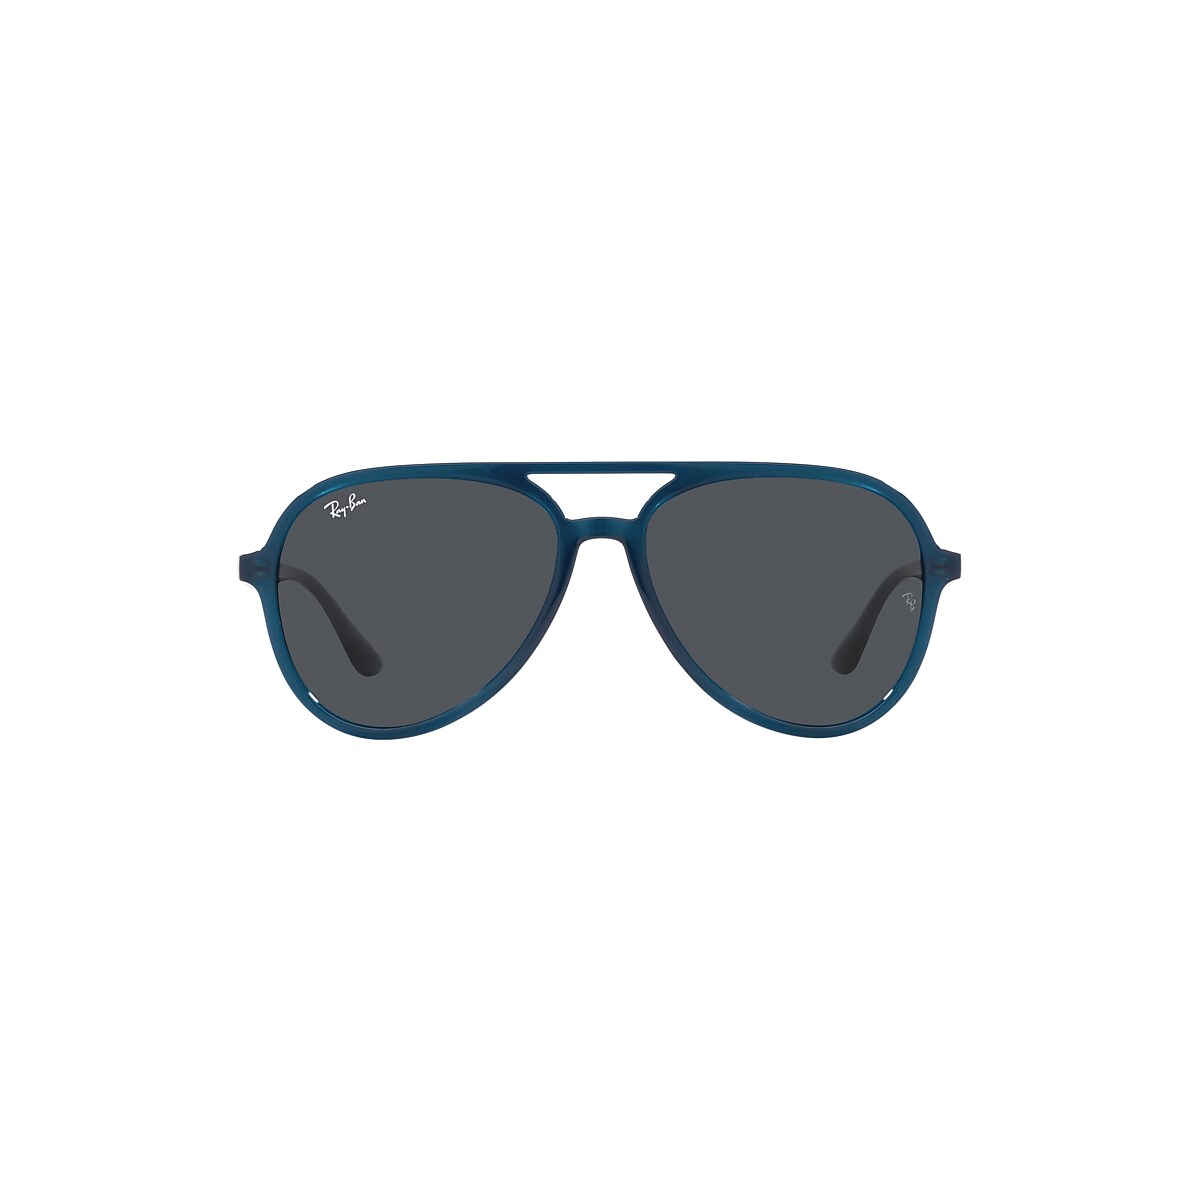 RB4376 Sunglasses in Opal Dark Blue and Dark Grey - RB4376 | Ray 